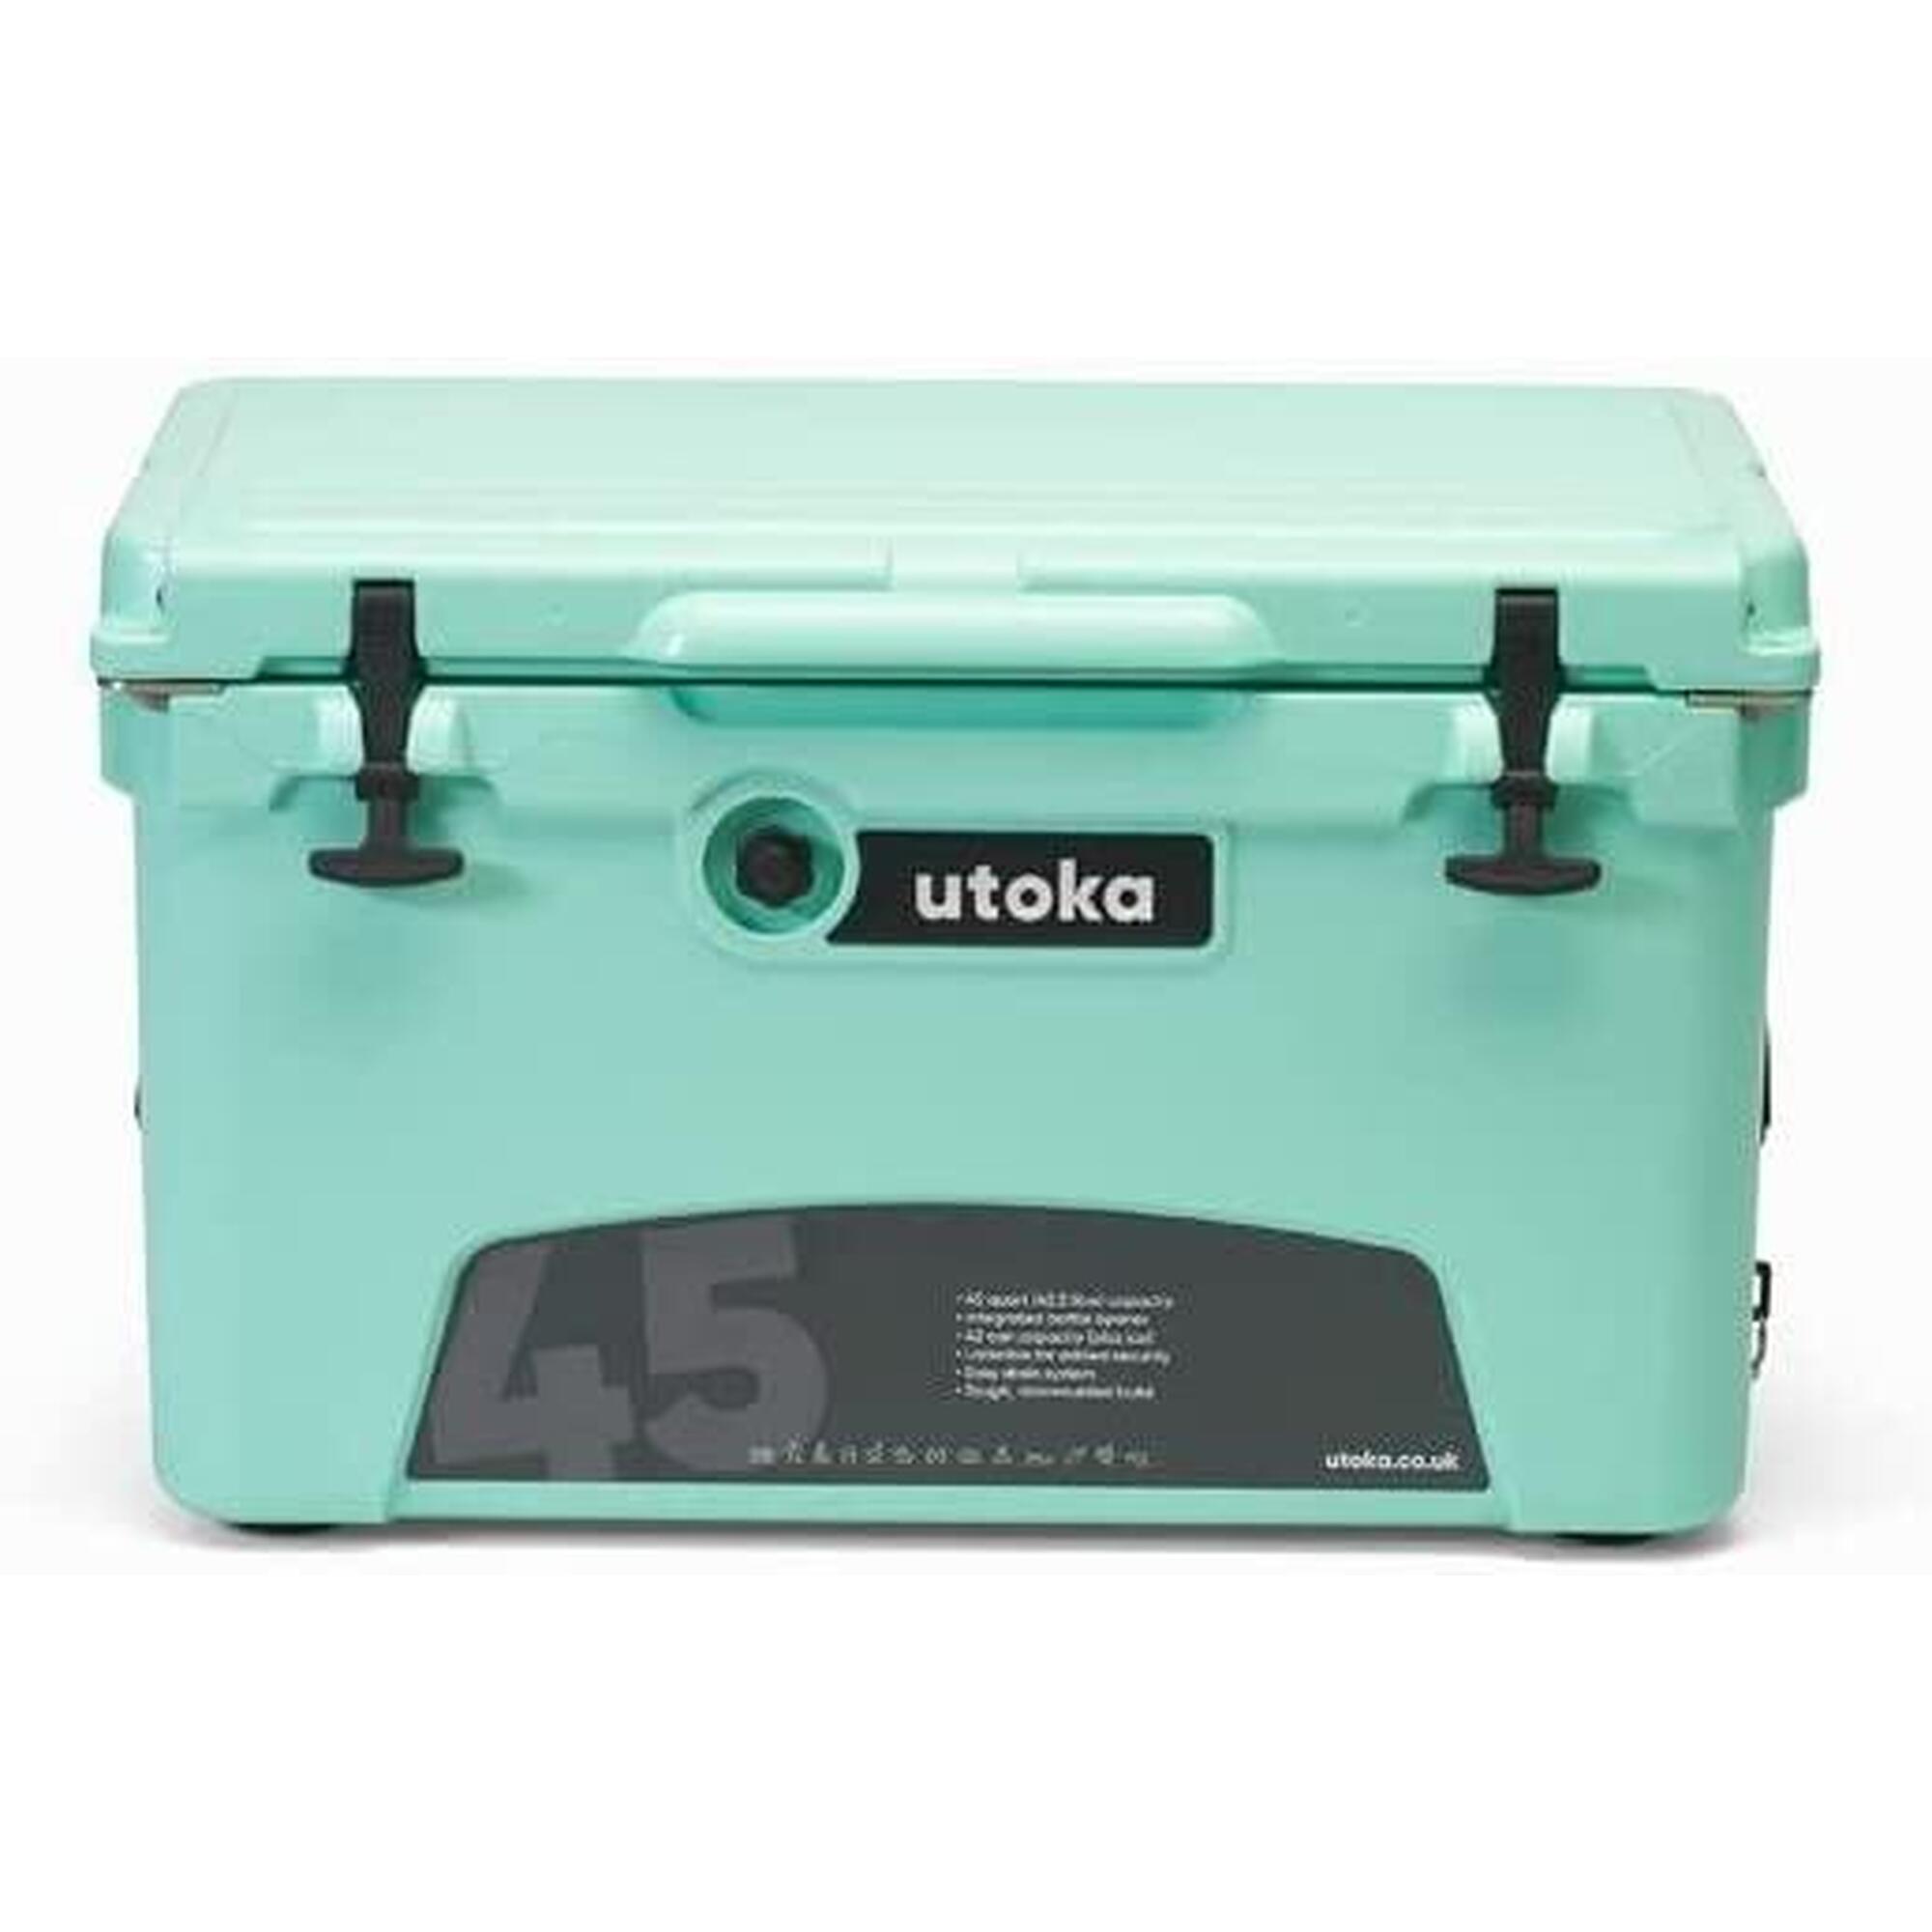 UTOKA Utoka 45 Cooler, Portable Hard Cool box With Carry Handle - Seafoam